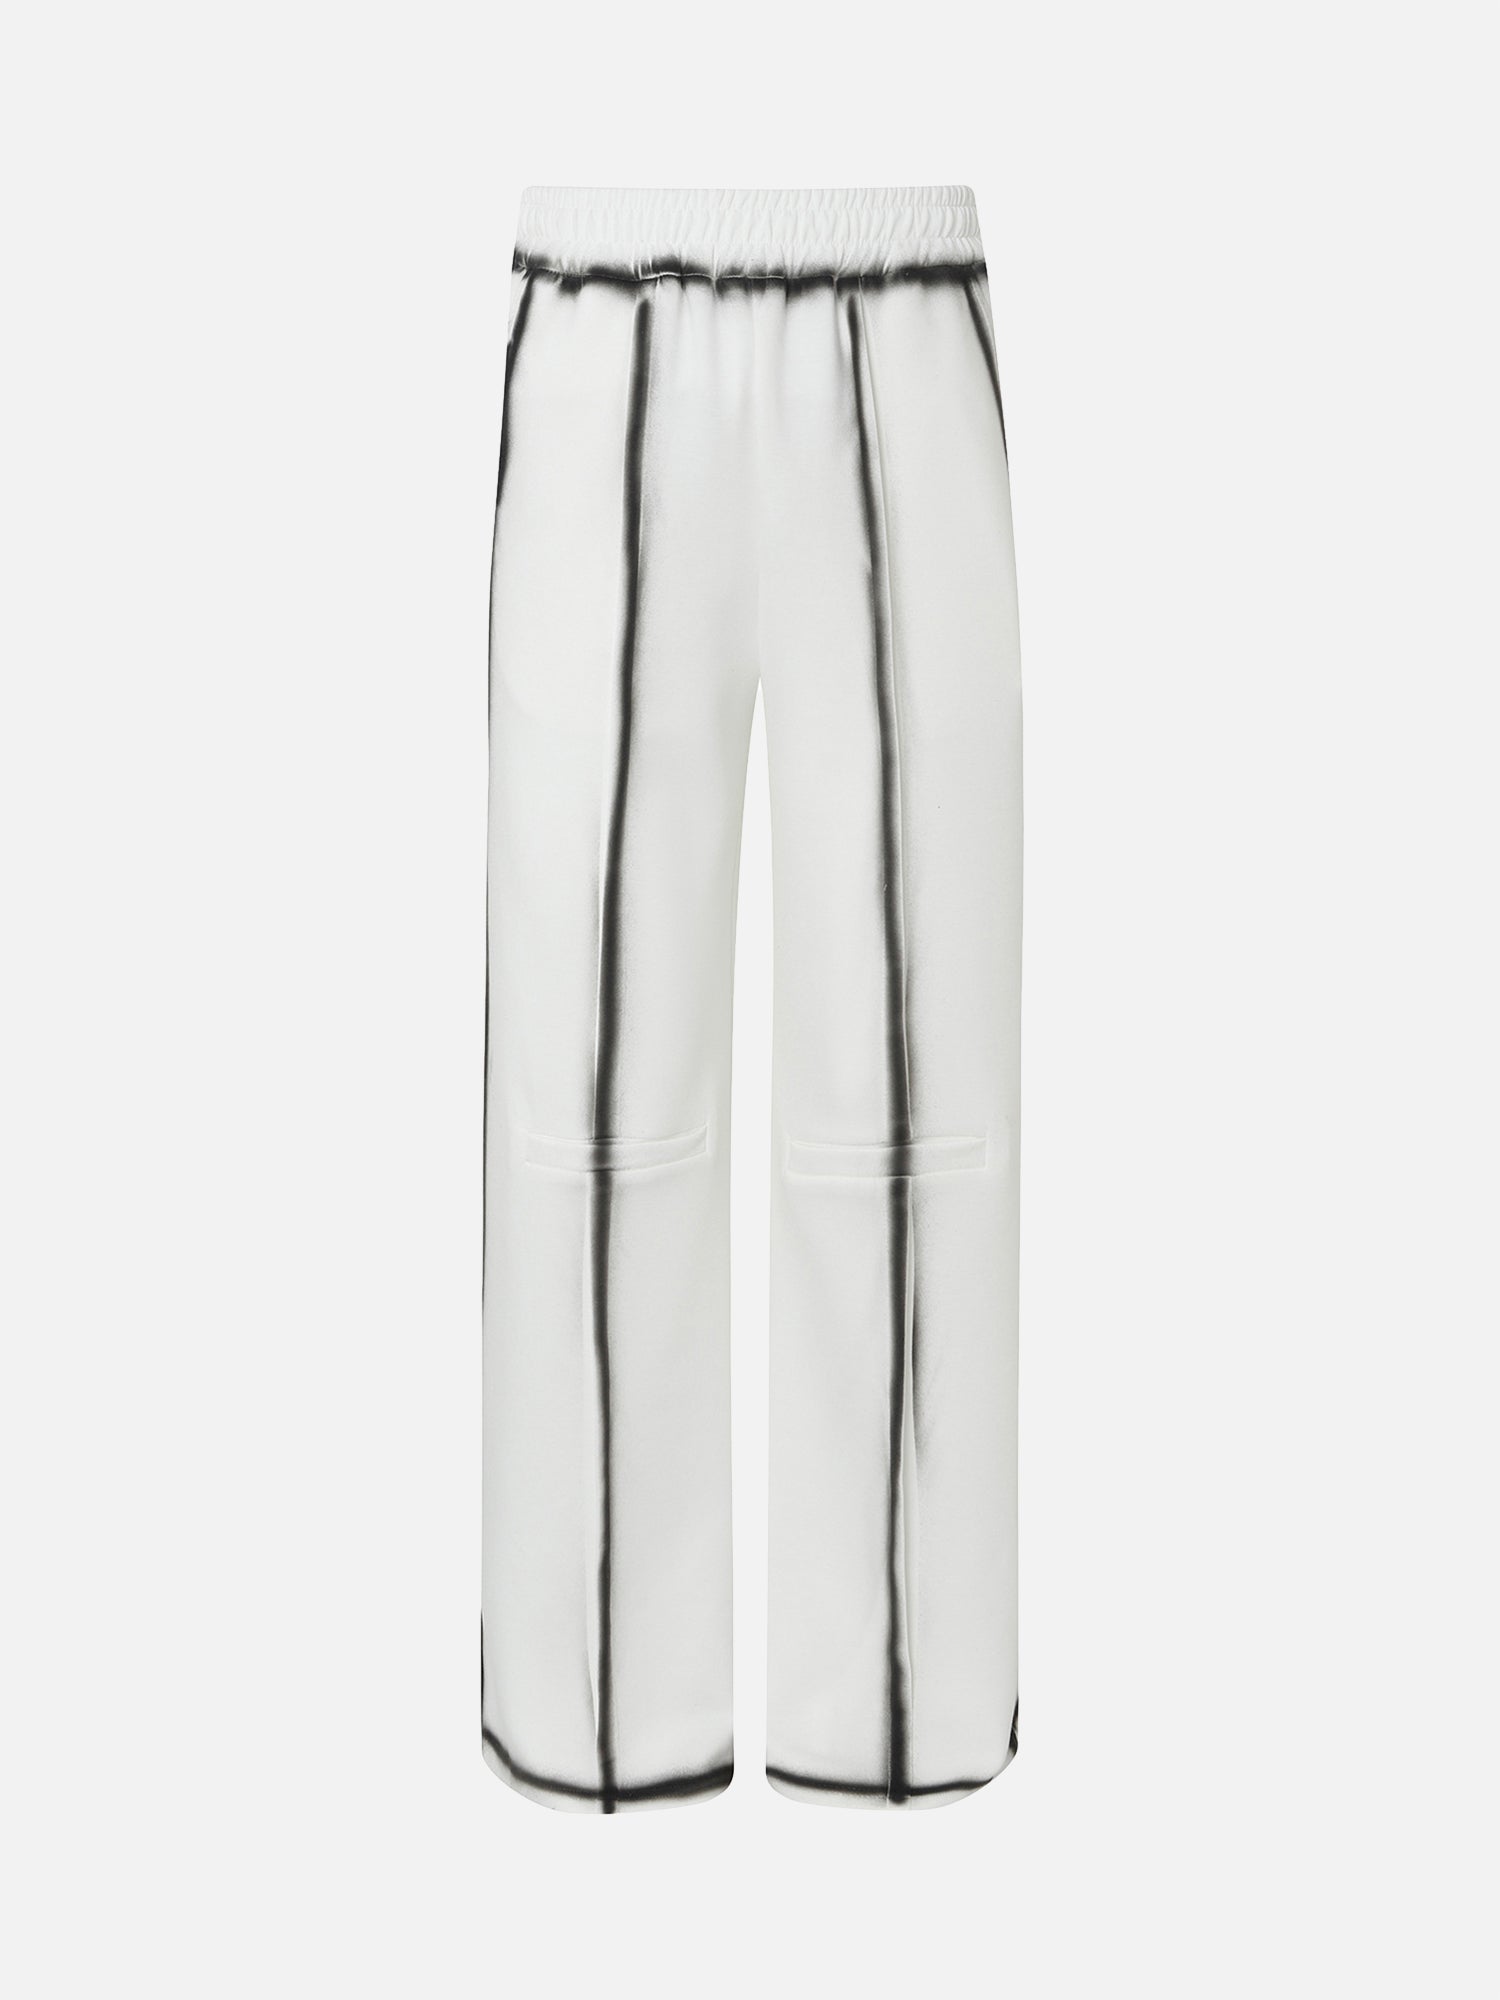 Thesupermade American Street Trend Simple Slim Fit Sports Pants